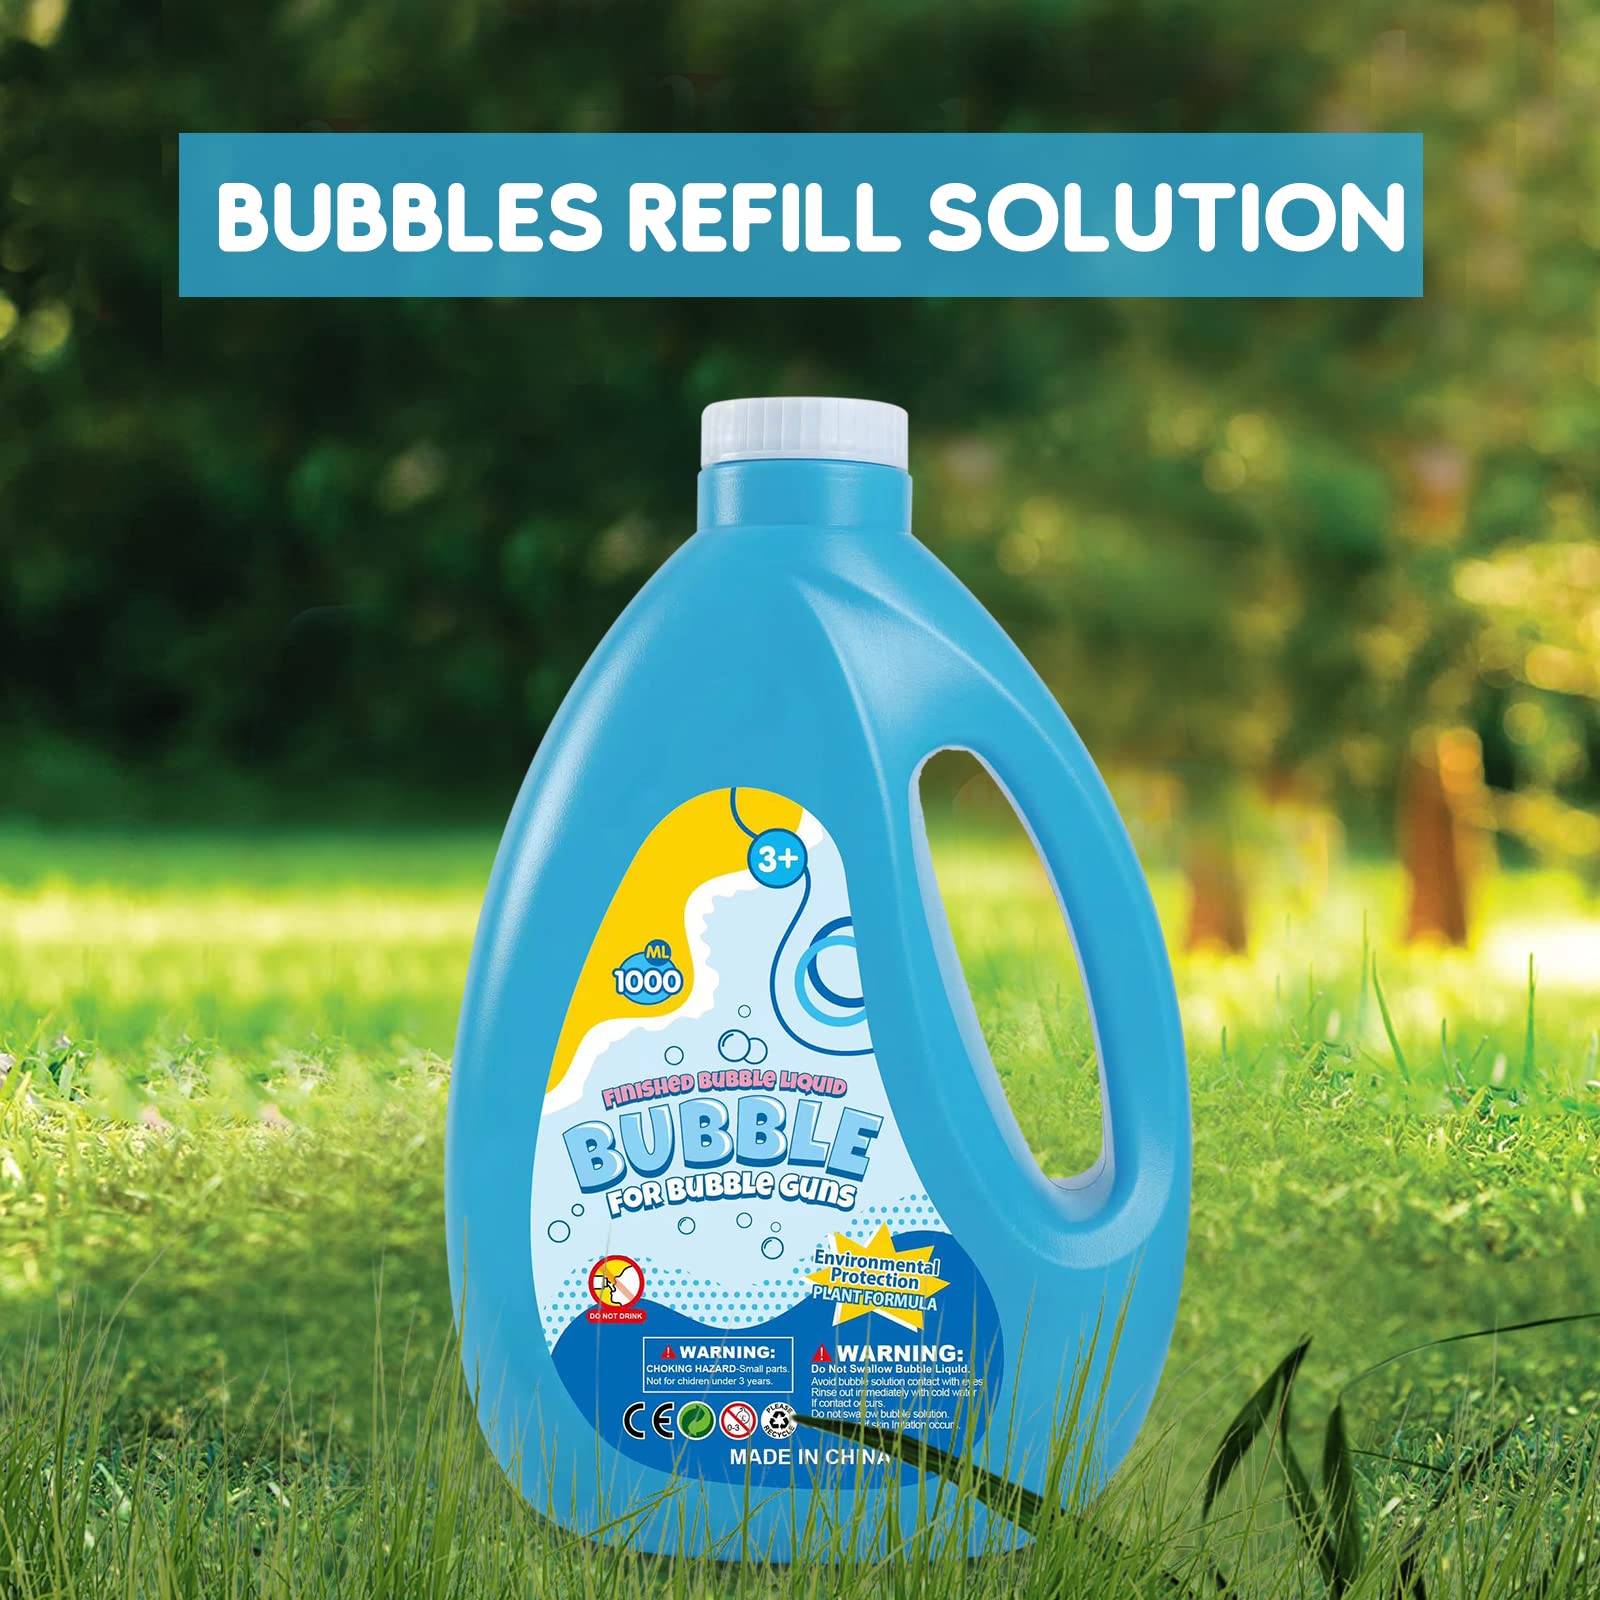 Bubble Machine Solution, 1 L/ 33.8 OZ Bubble Refill Solution for Kids Graduation Parties, Bubble Machine, Giant Bubble Wand, Bubble Gun Blower